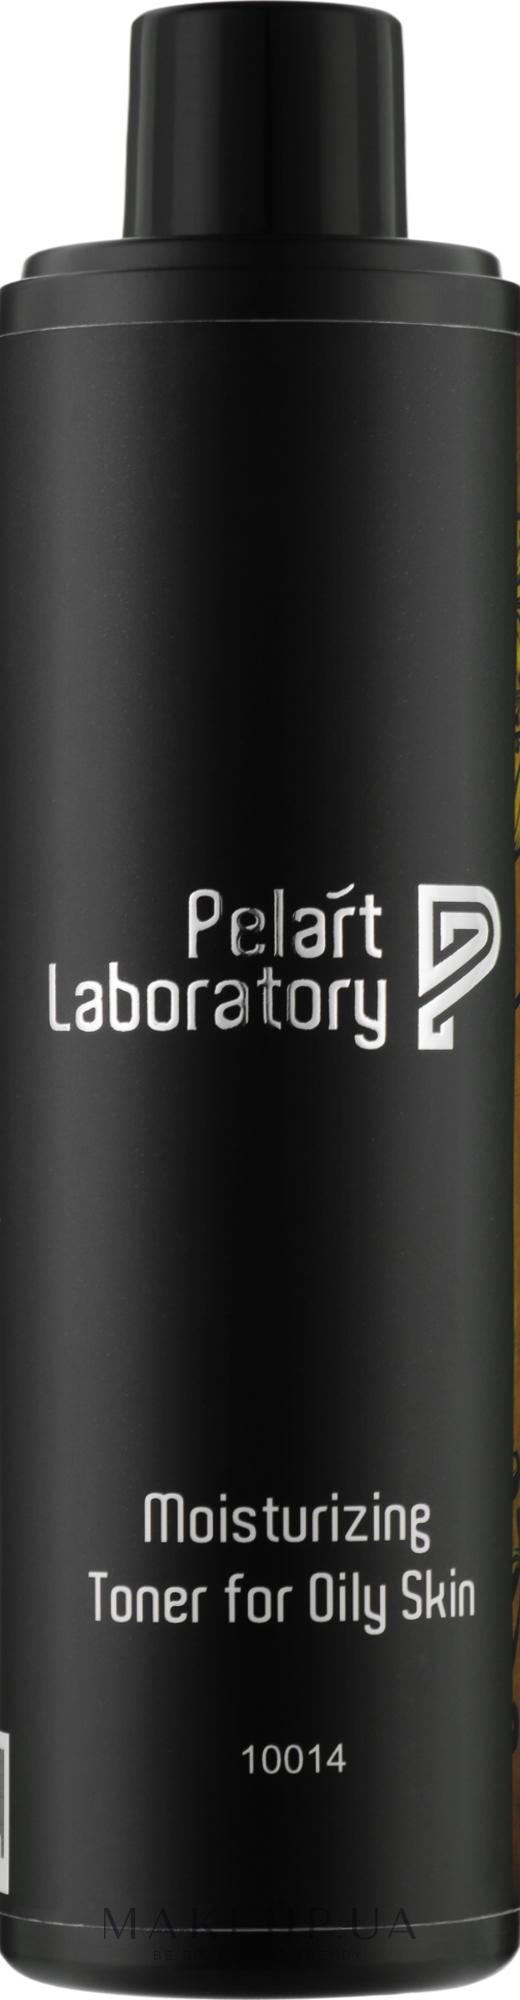 Увлажняющий тоник для жирной кожи лица - Pelart Laboratory Moisturizing Toner For Oily Skin  — фото 250ml